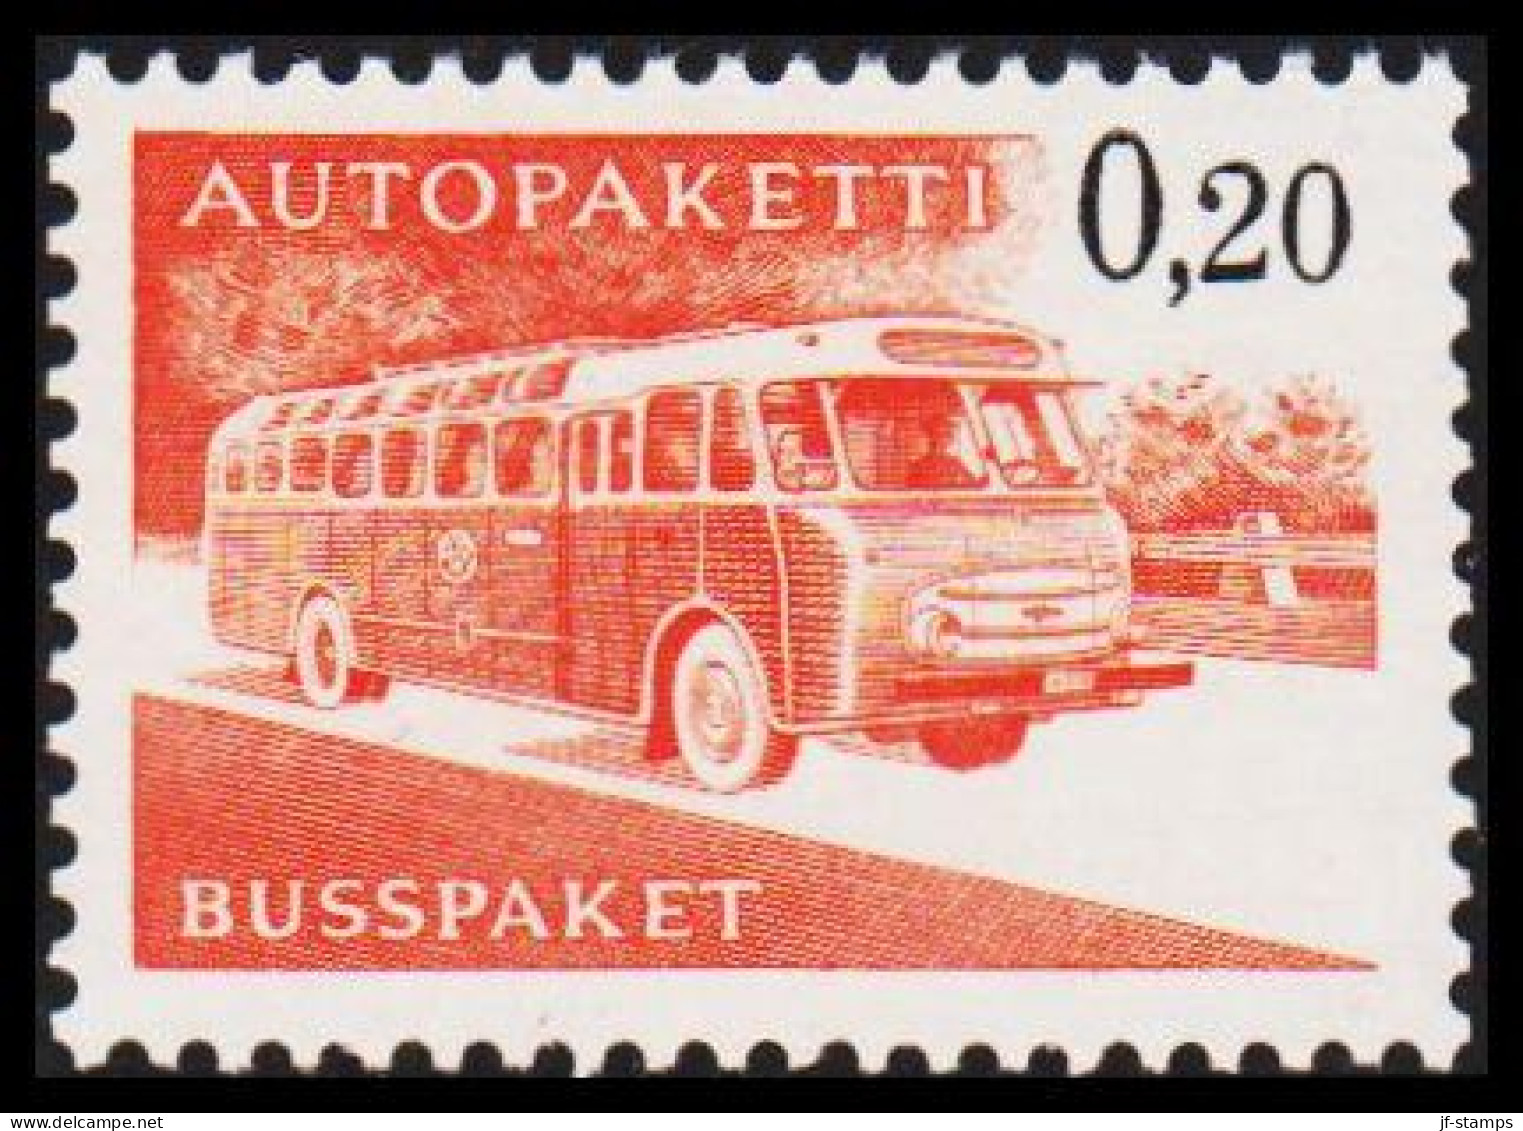 1963-1980. FINLAND. Mail Bus. 0,20 Mk. AUTOPAKETTI - BUSSPAKET Never Hinged. Lumogen. Whit... (Michel AP 11y) - JF535623 - Postbuspakete